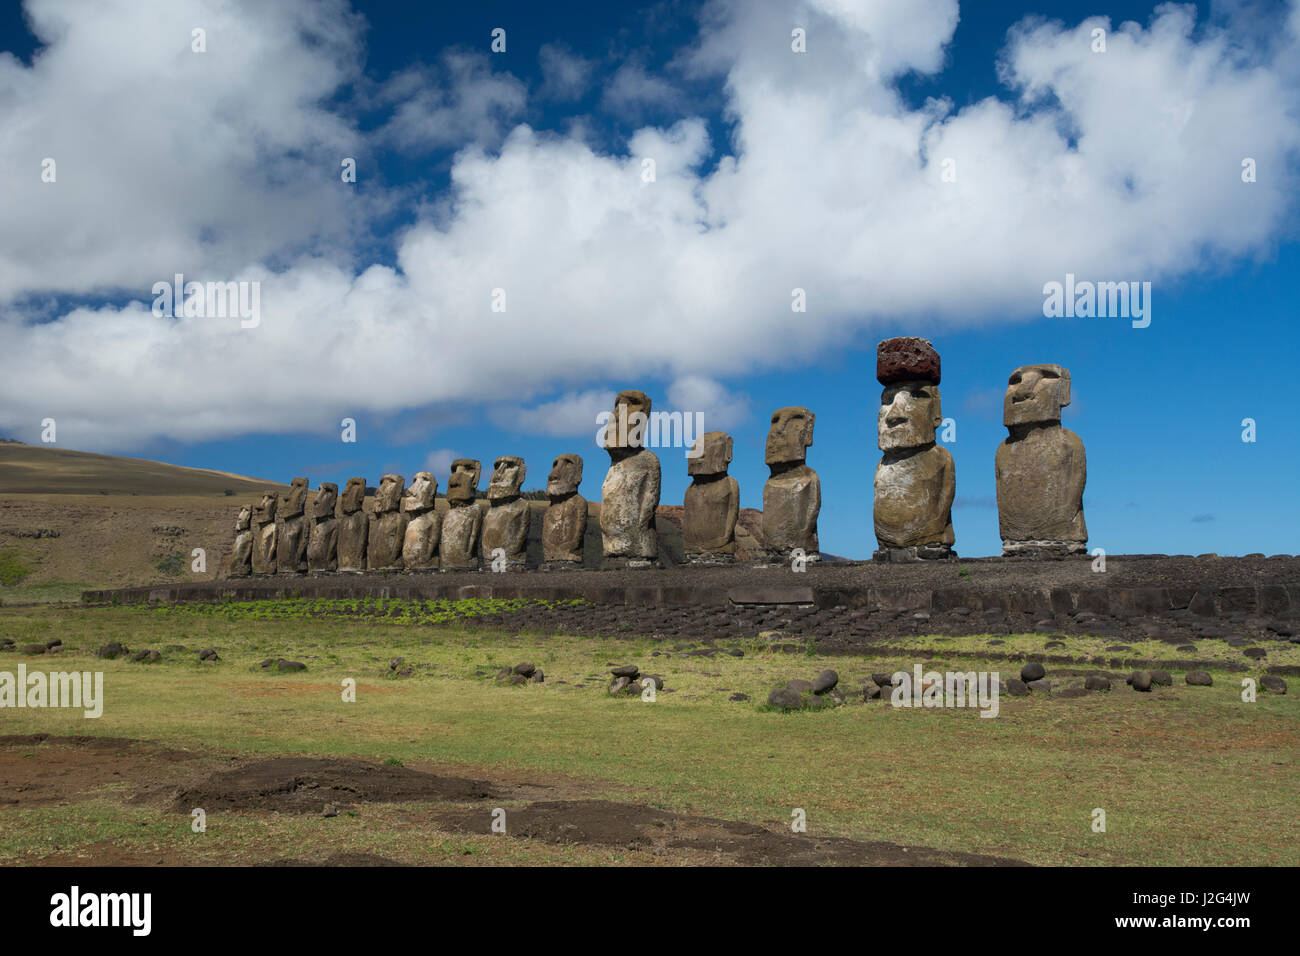 Chile, Easter Island, Hanga Nui. Rapa Nui National Park, Ahu Tongariki (aka Tonariki). Fifteen large moi statues on the largest ceremonial platform in all of Polynesia. Stock Photo